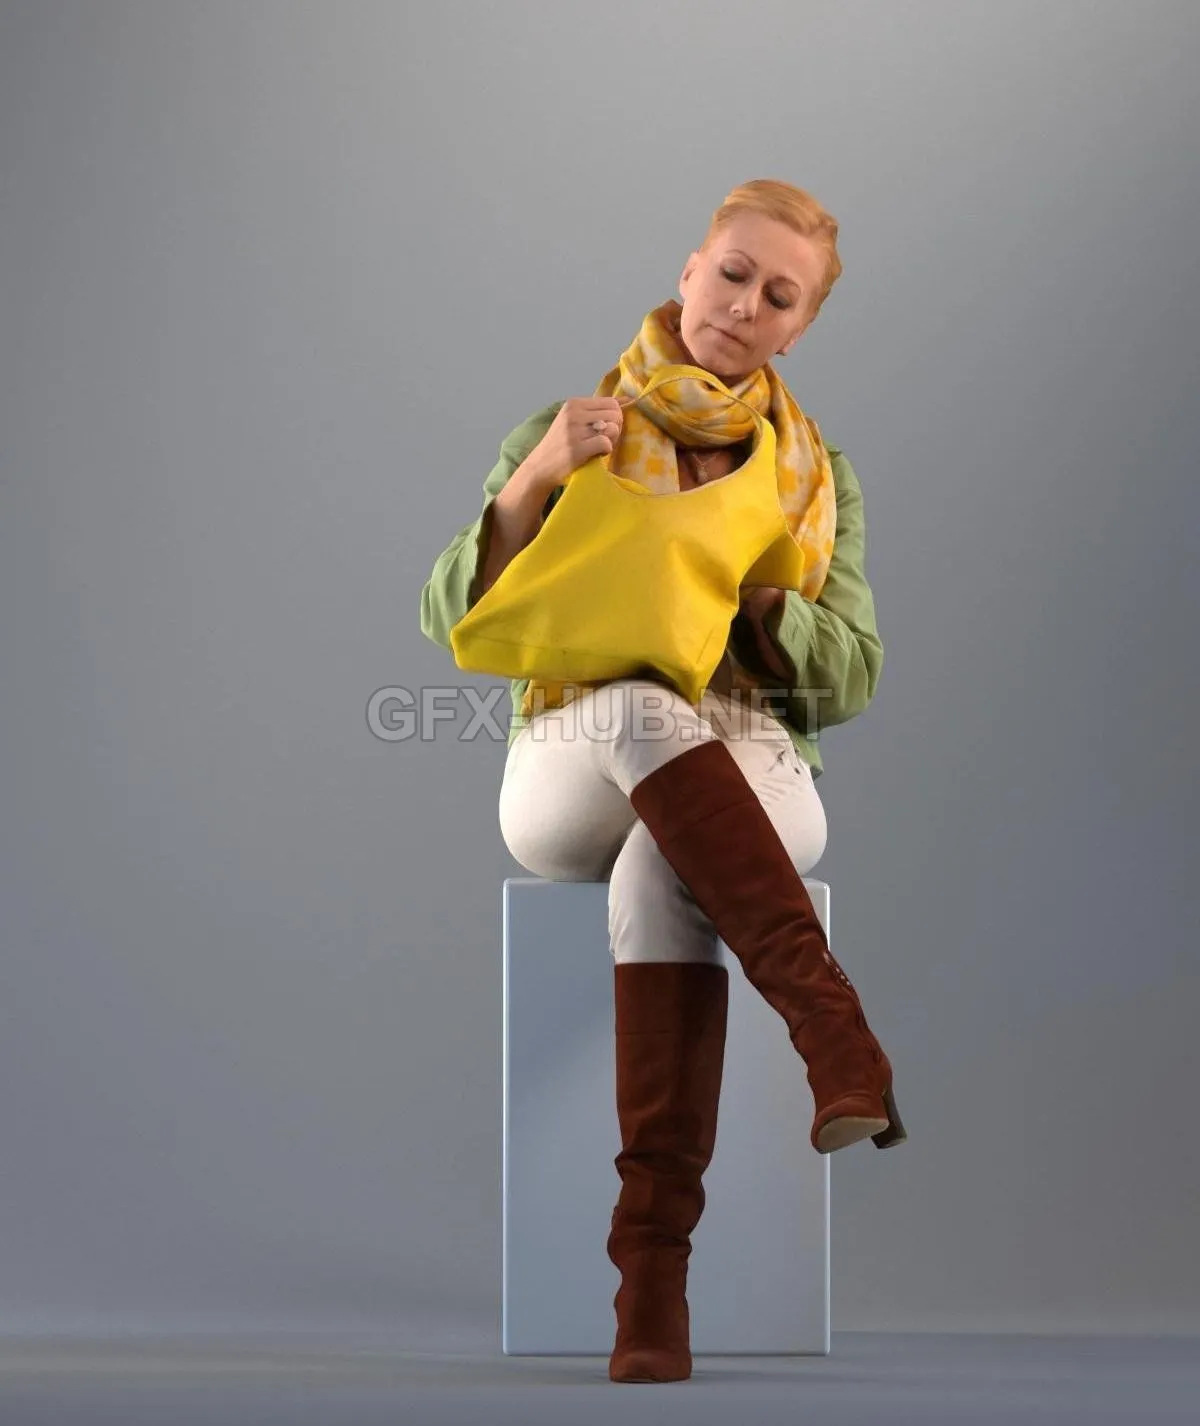 PBR Game 3D Model – Woman Sitting Holding Bag